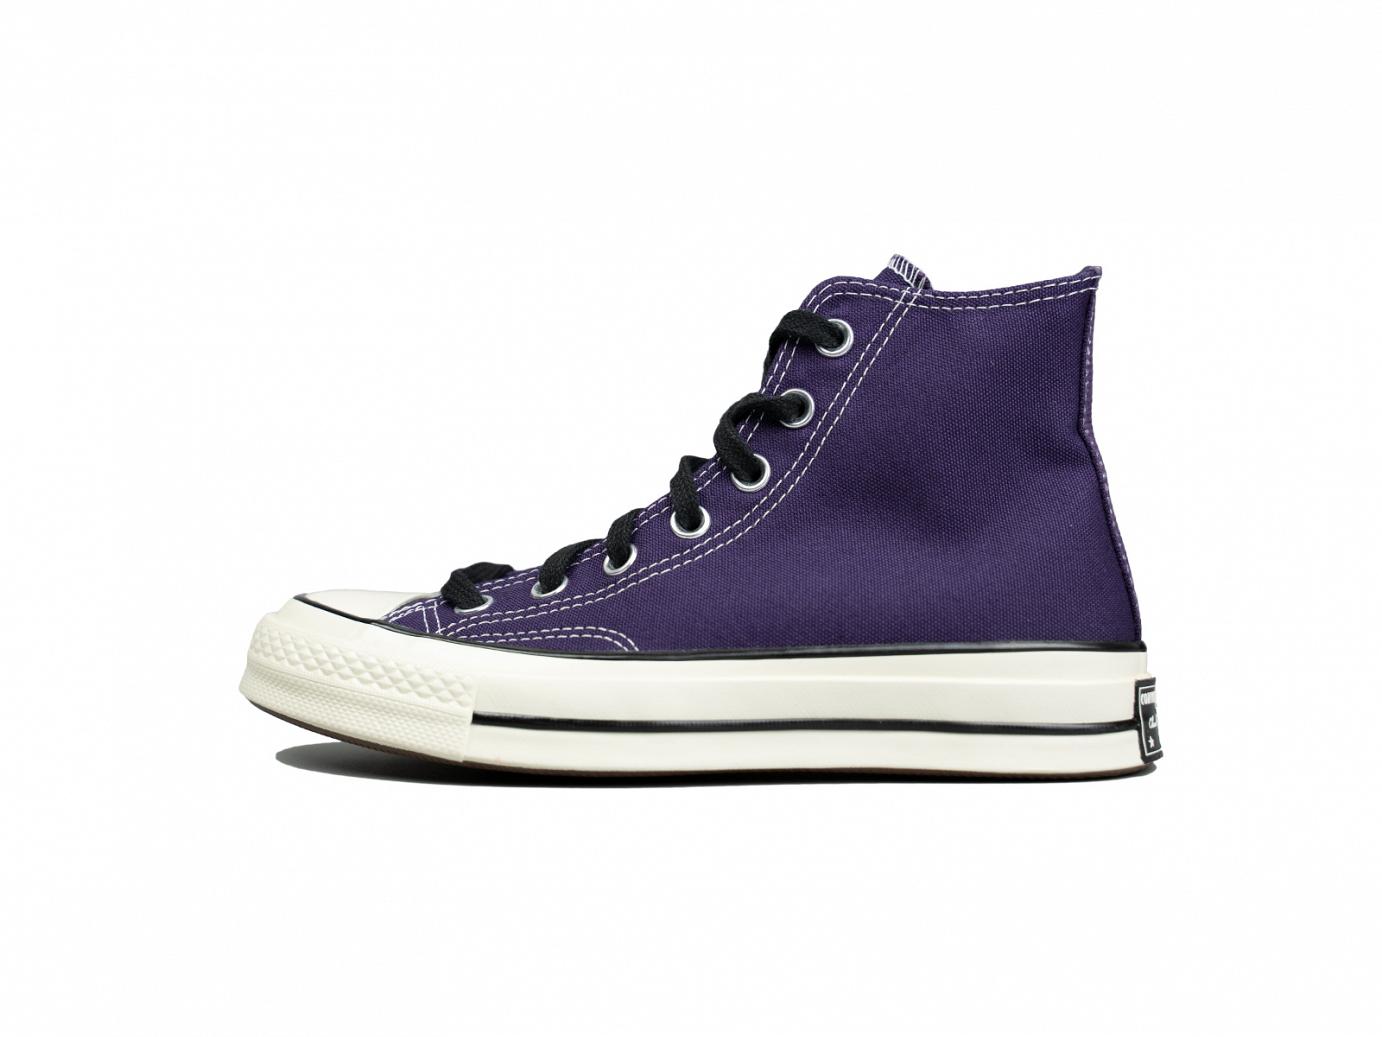 purple converse size 10